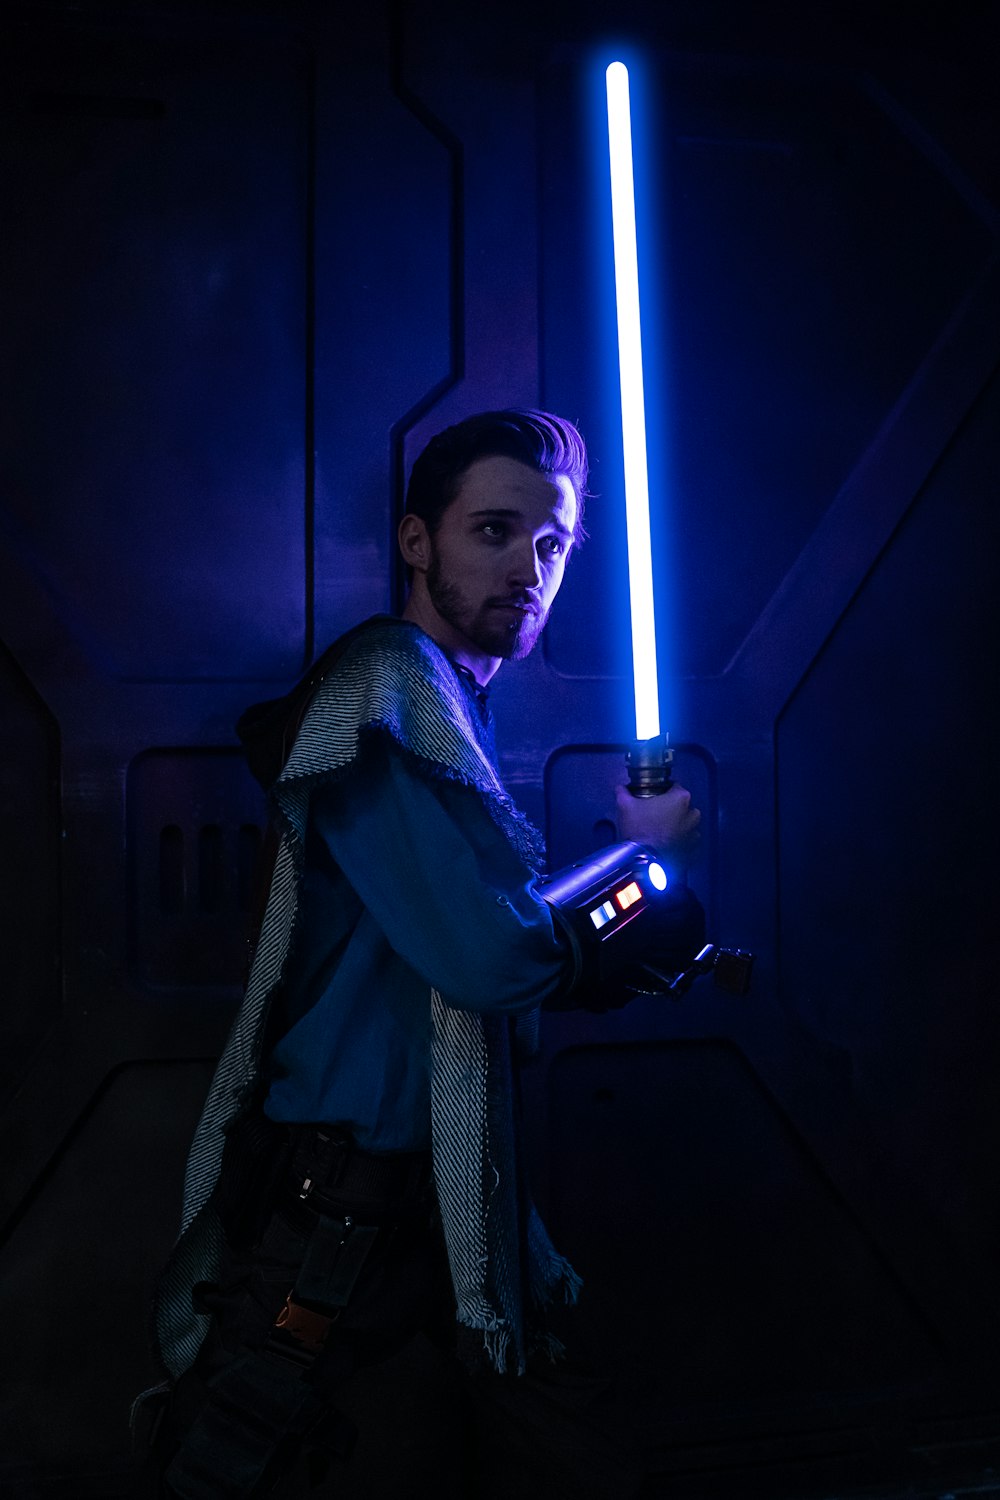 a man holding a light saber in a dark room